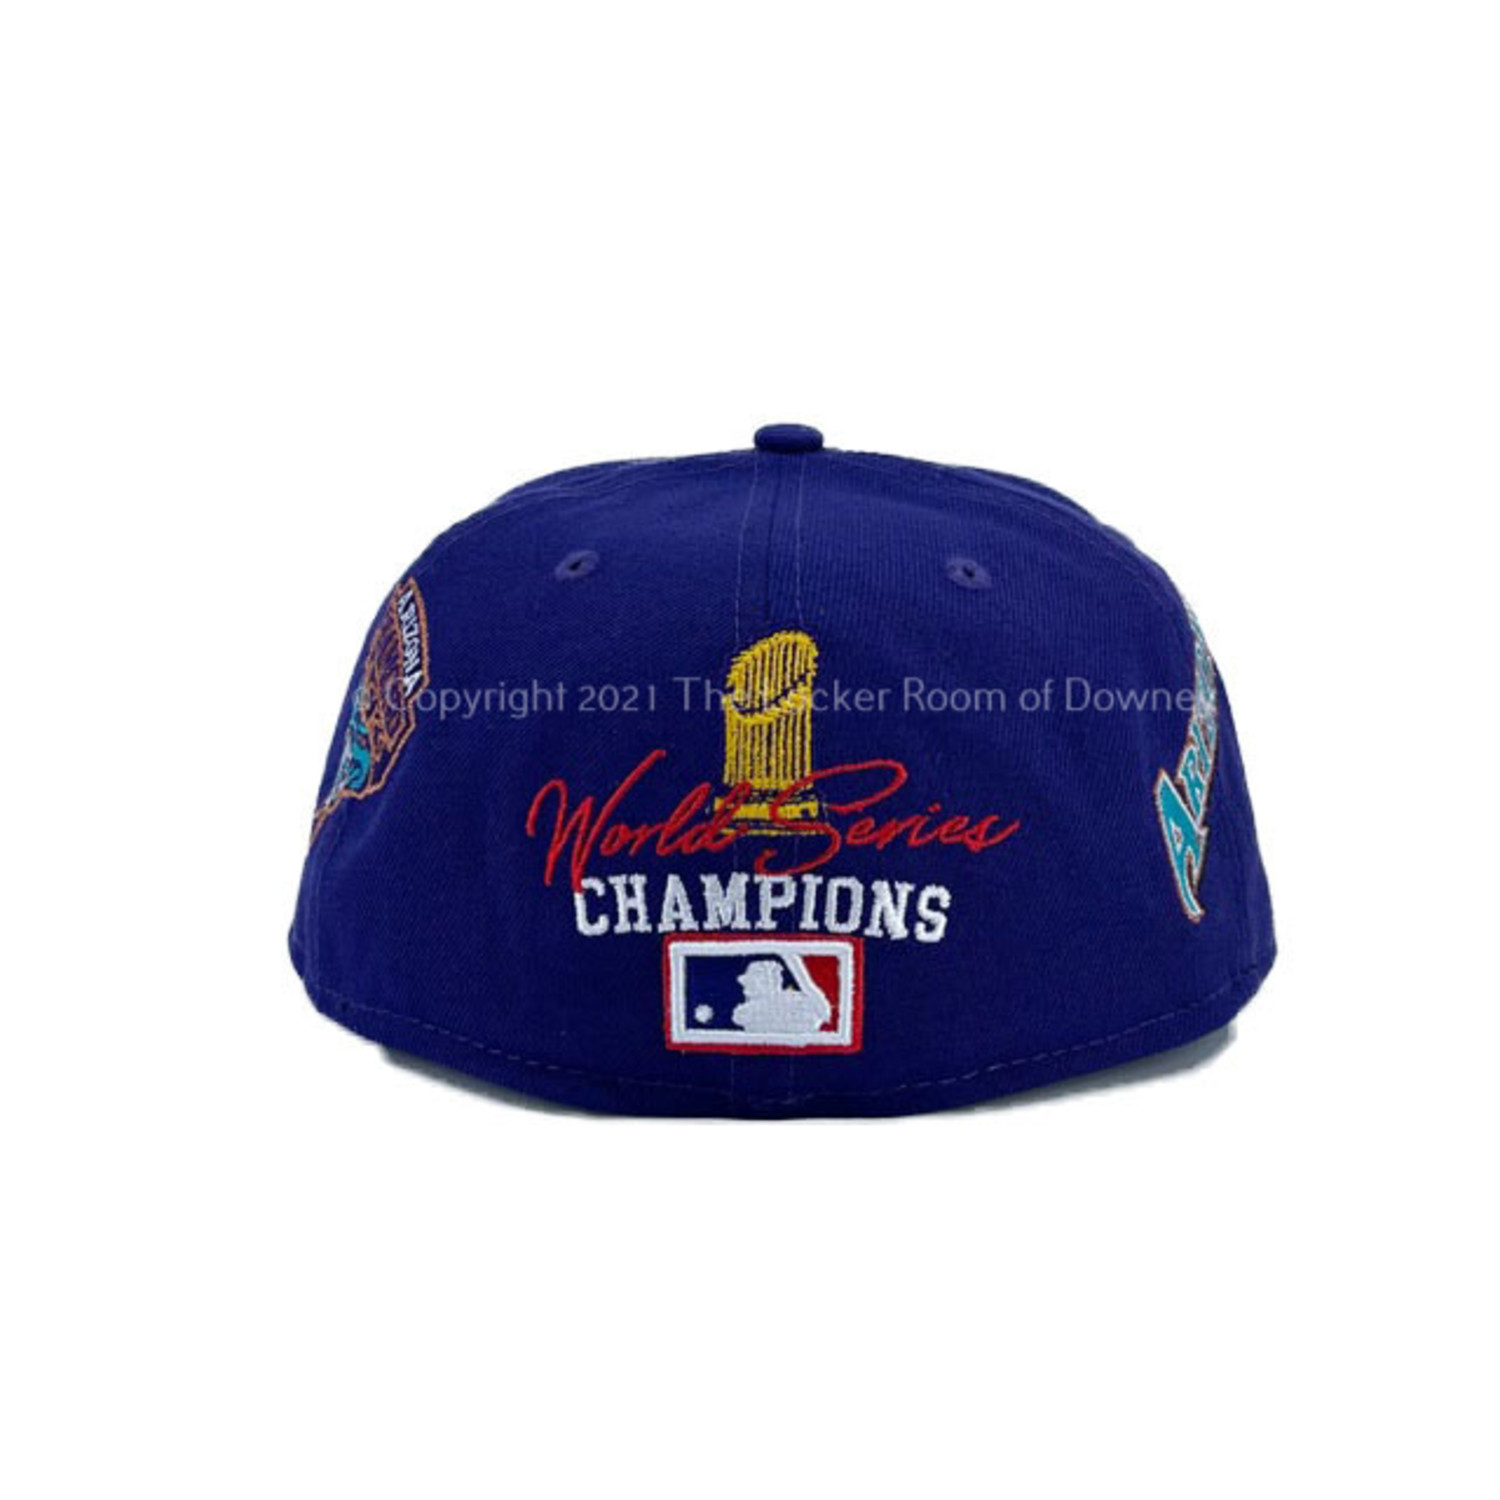 Arizona Diamondbacks New Era 2001 World Series Champions Count the Rings  59FIFTY Fitted Hat - Purple